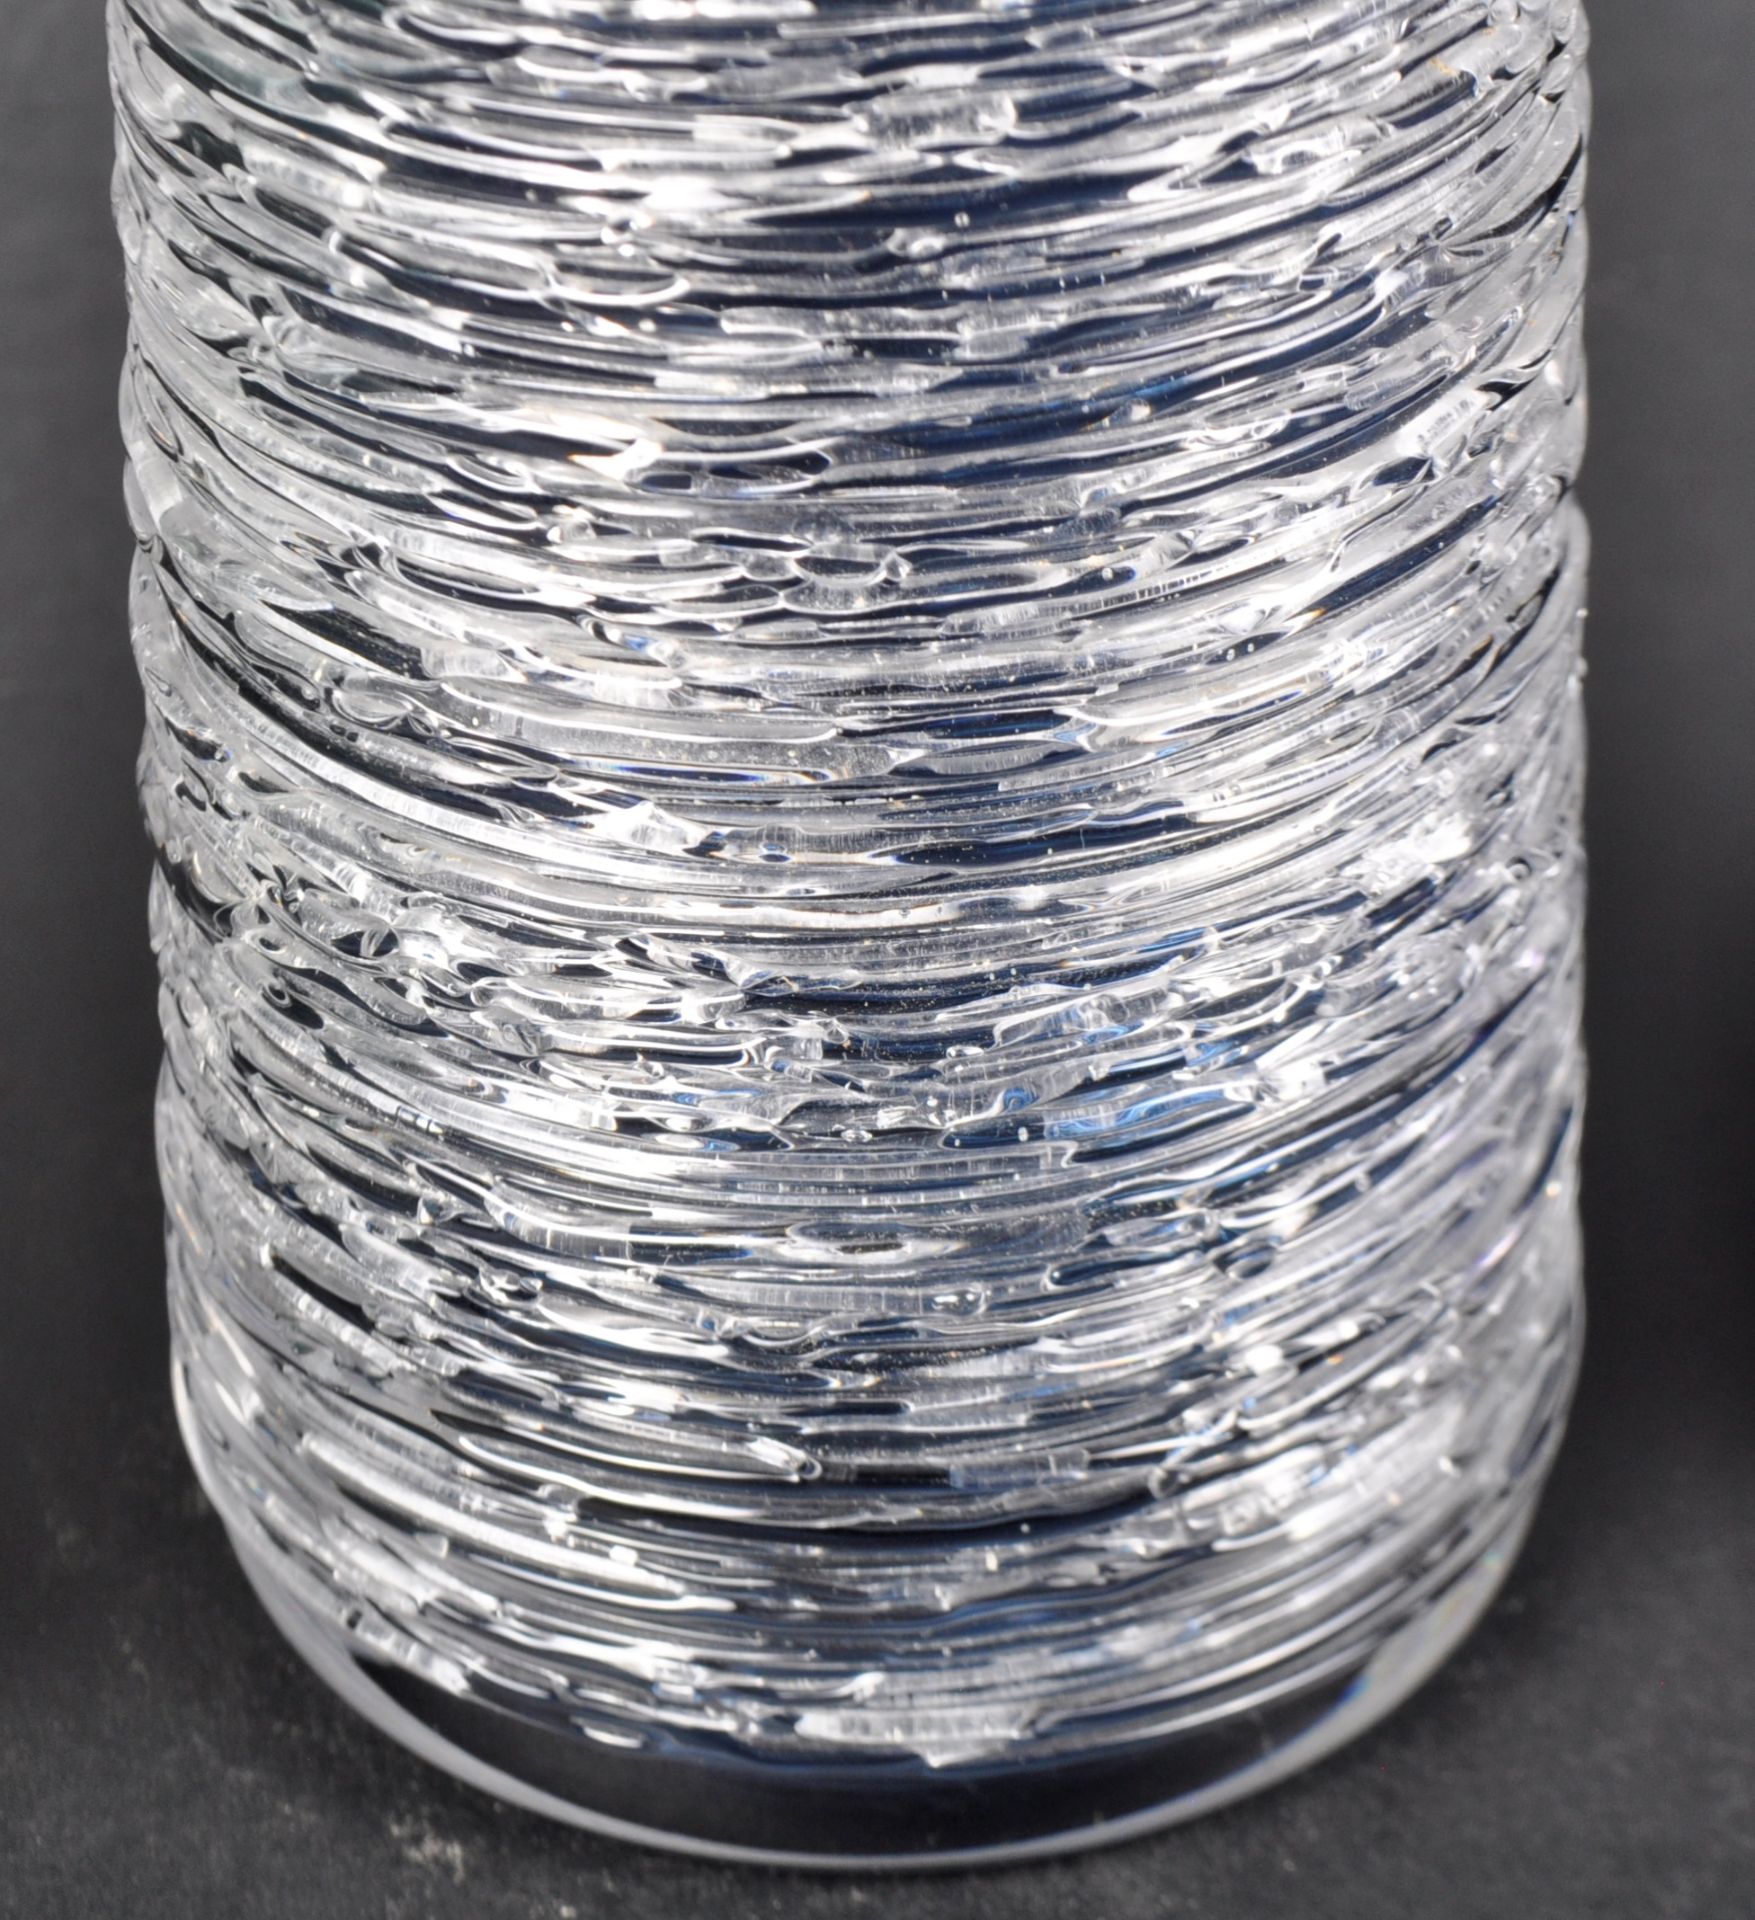 BENGT EDENFALK FOR SKRUF - A TRIO OF SPUN STUDIO ART GLASS VASES - Image 8 of 9